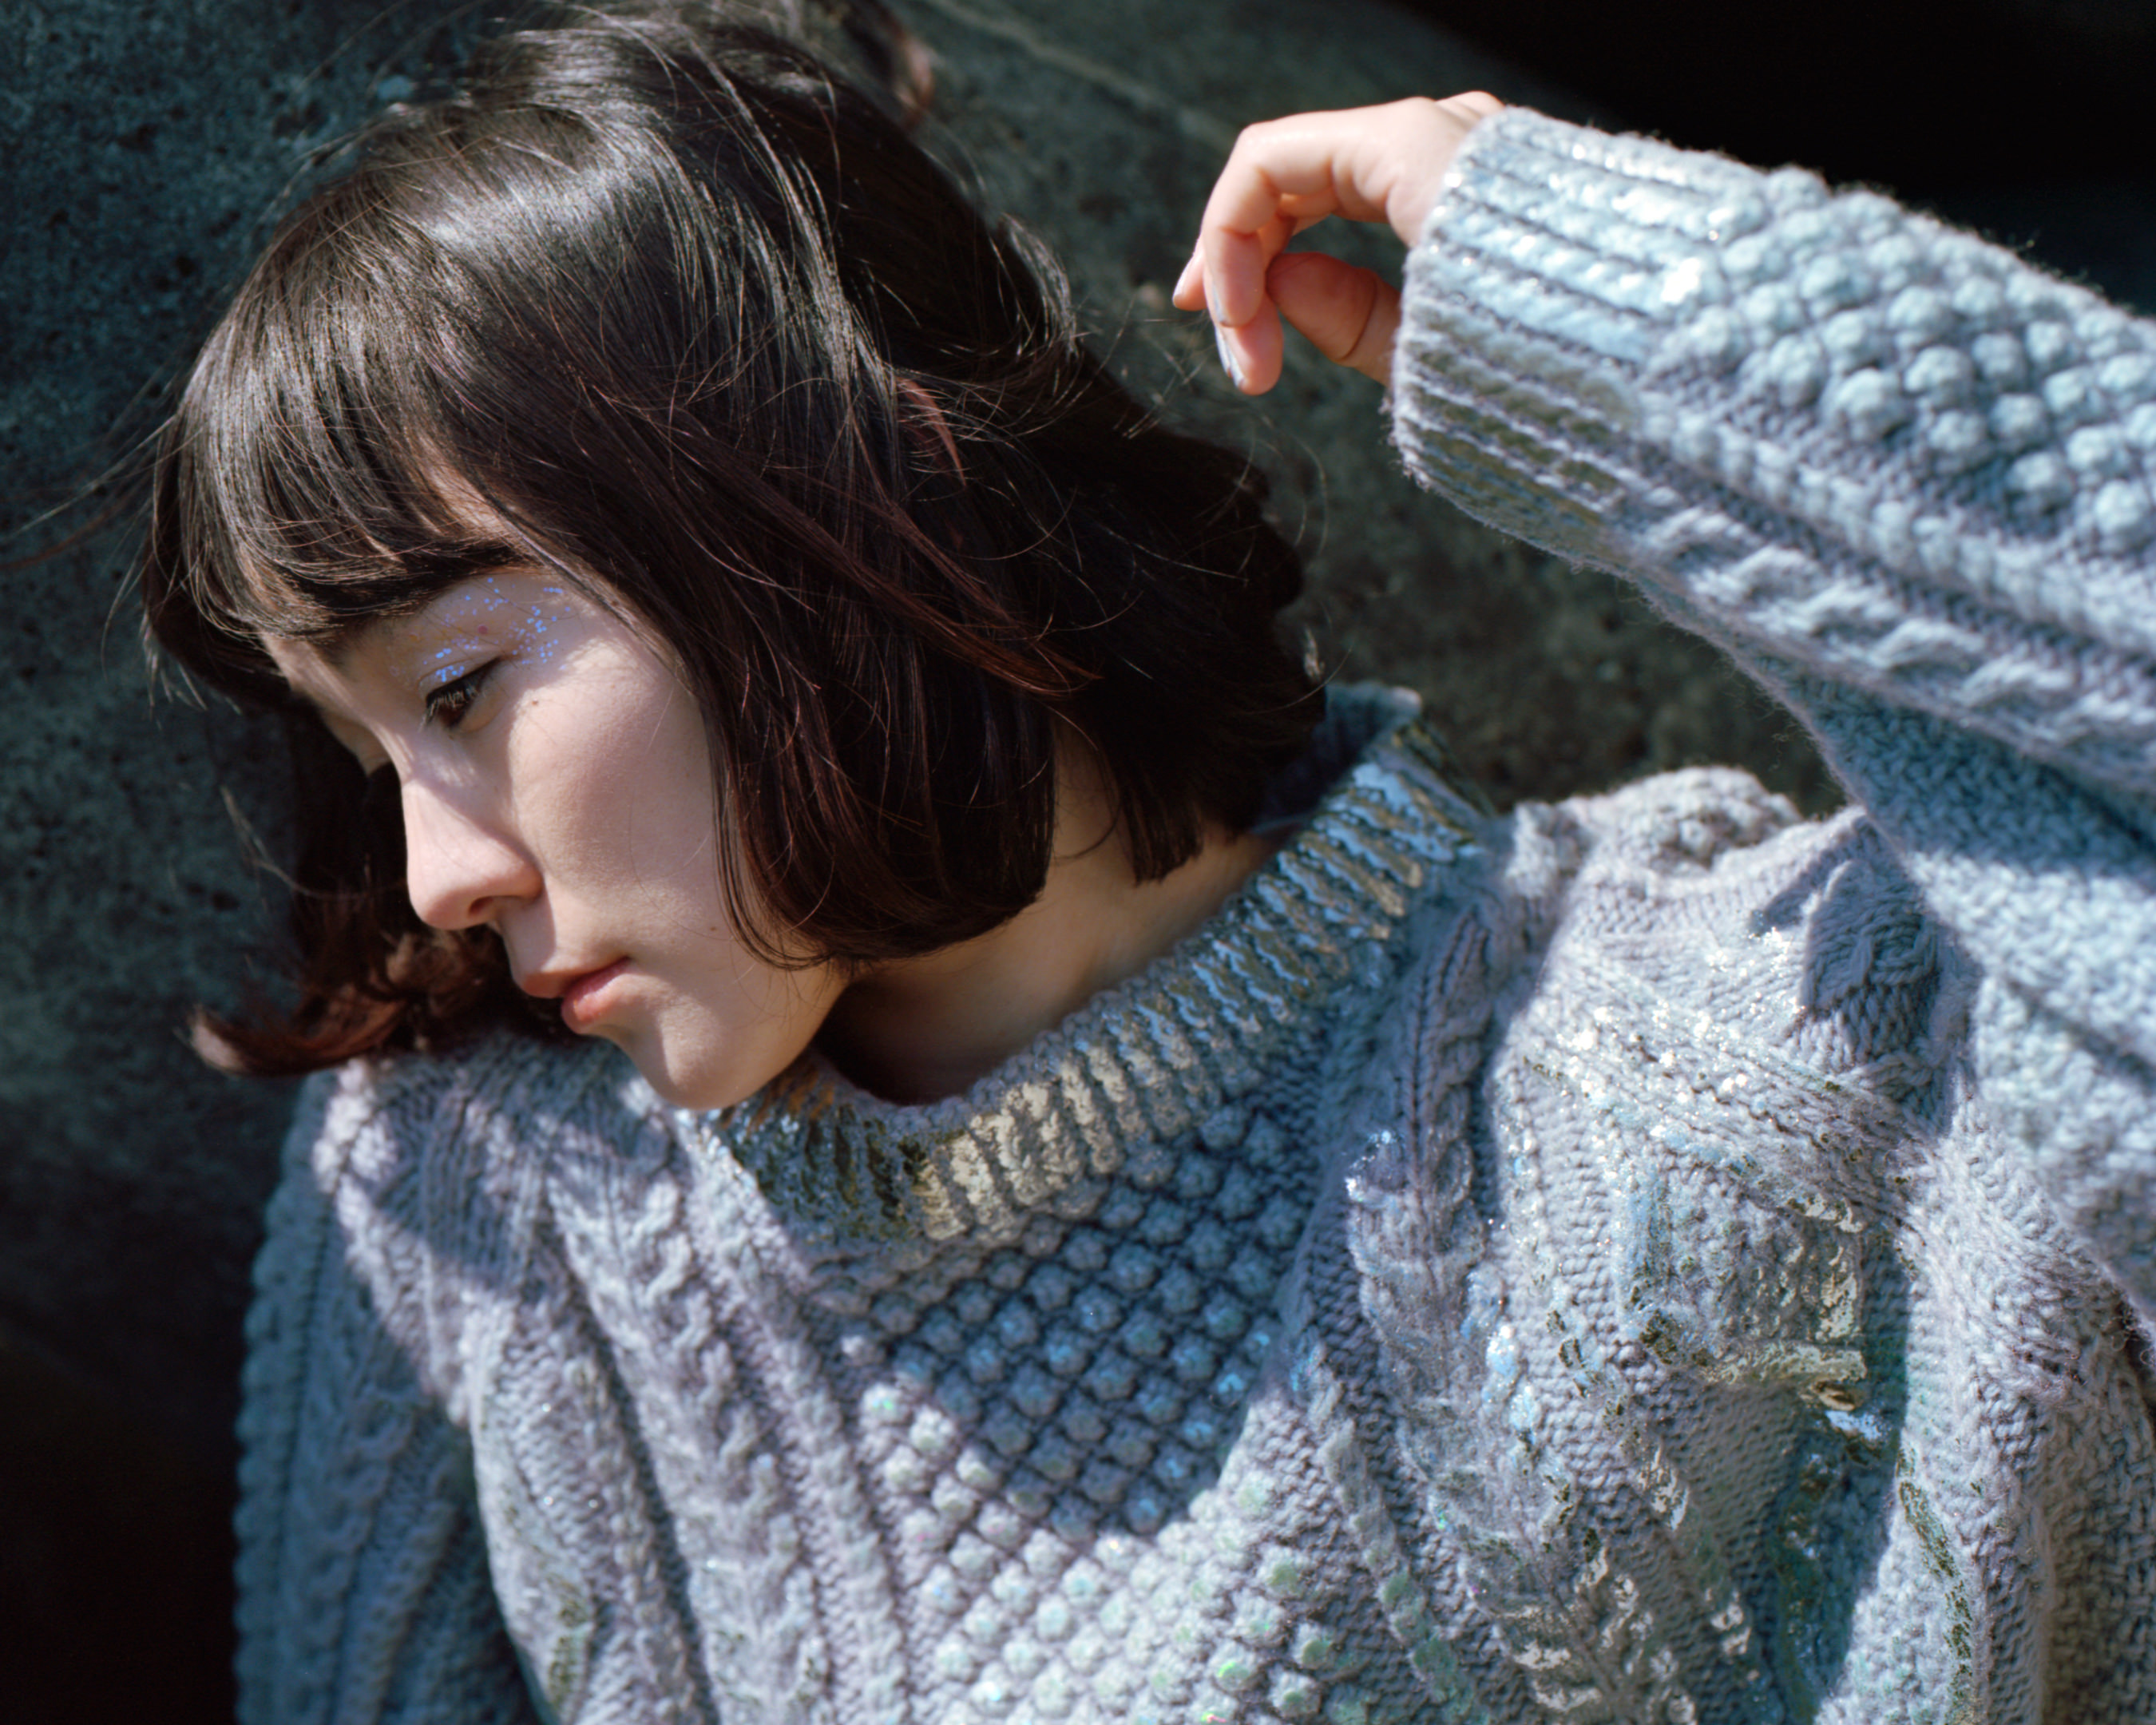 YUKI FUJISAWA Sweater in the Memory 記憶の中のセーター 2015